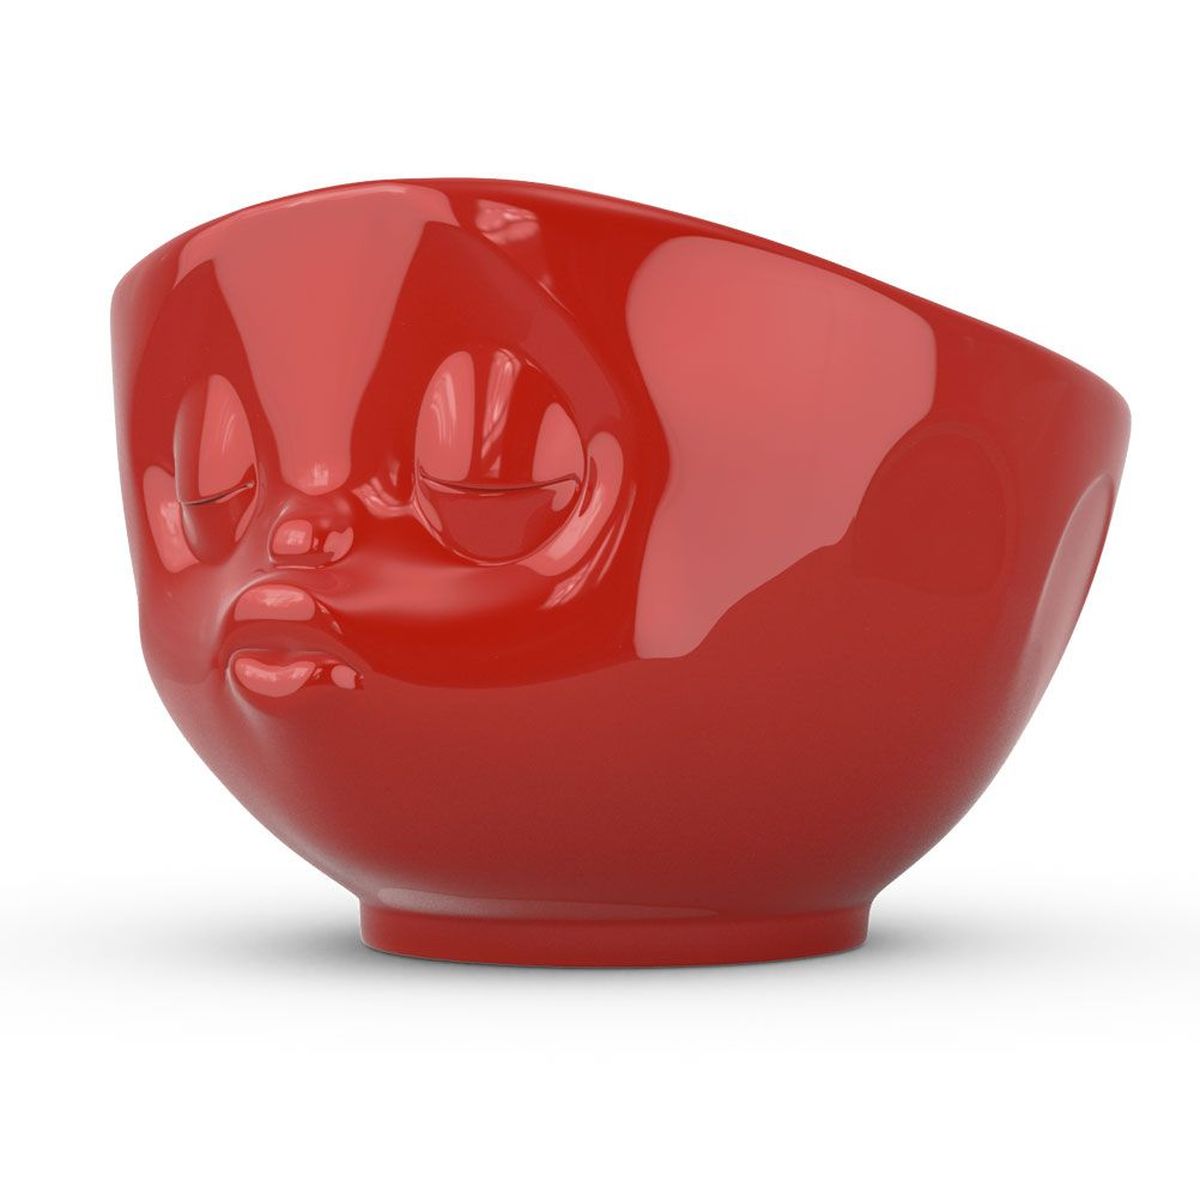 Large hotel porcelain bowl Tassen - Kissing red